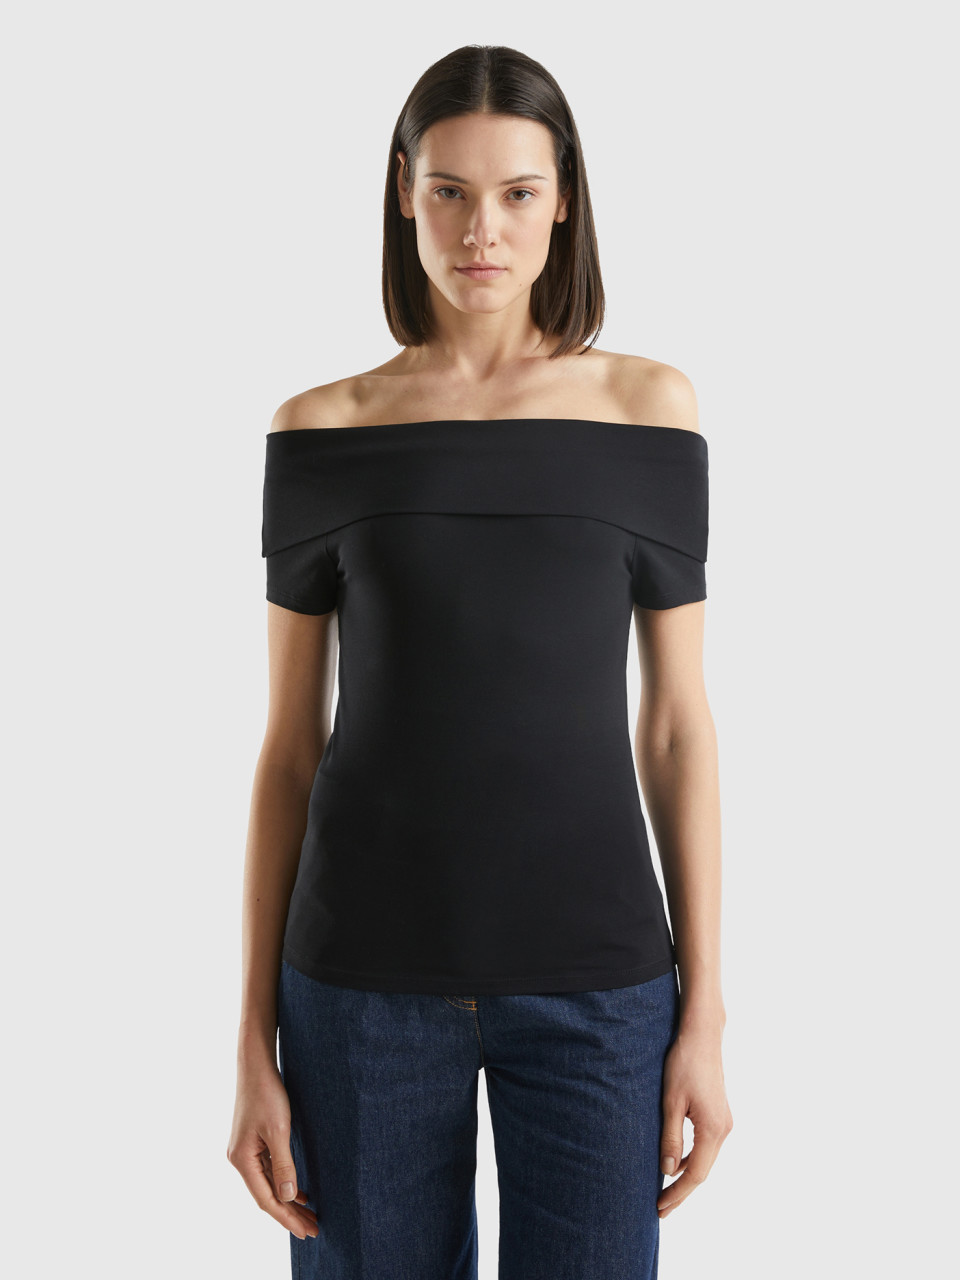 Benetton, Slim-fit T-shirt With Bare Shoulders, Black, Women